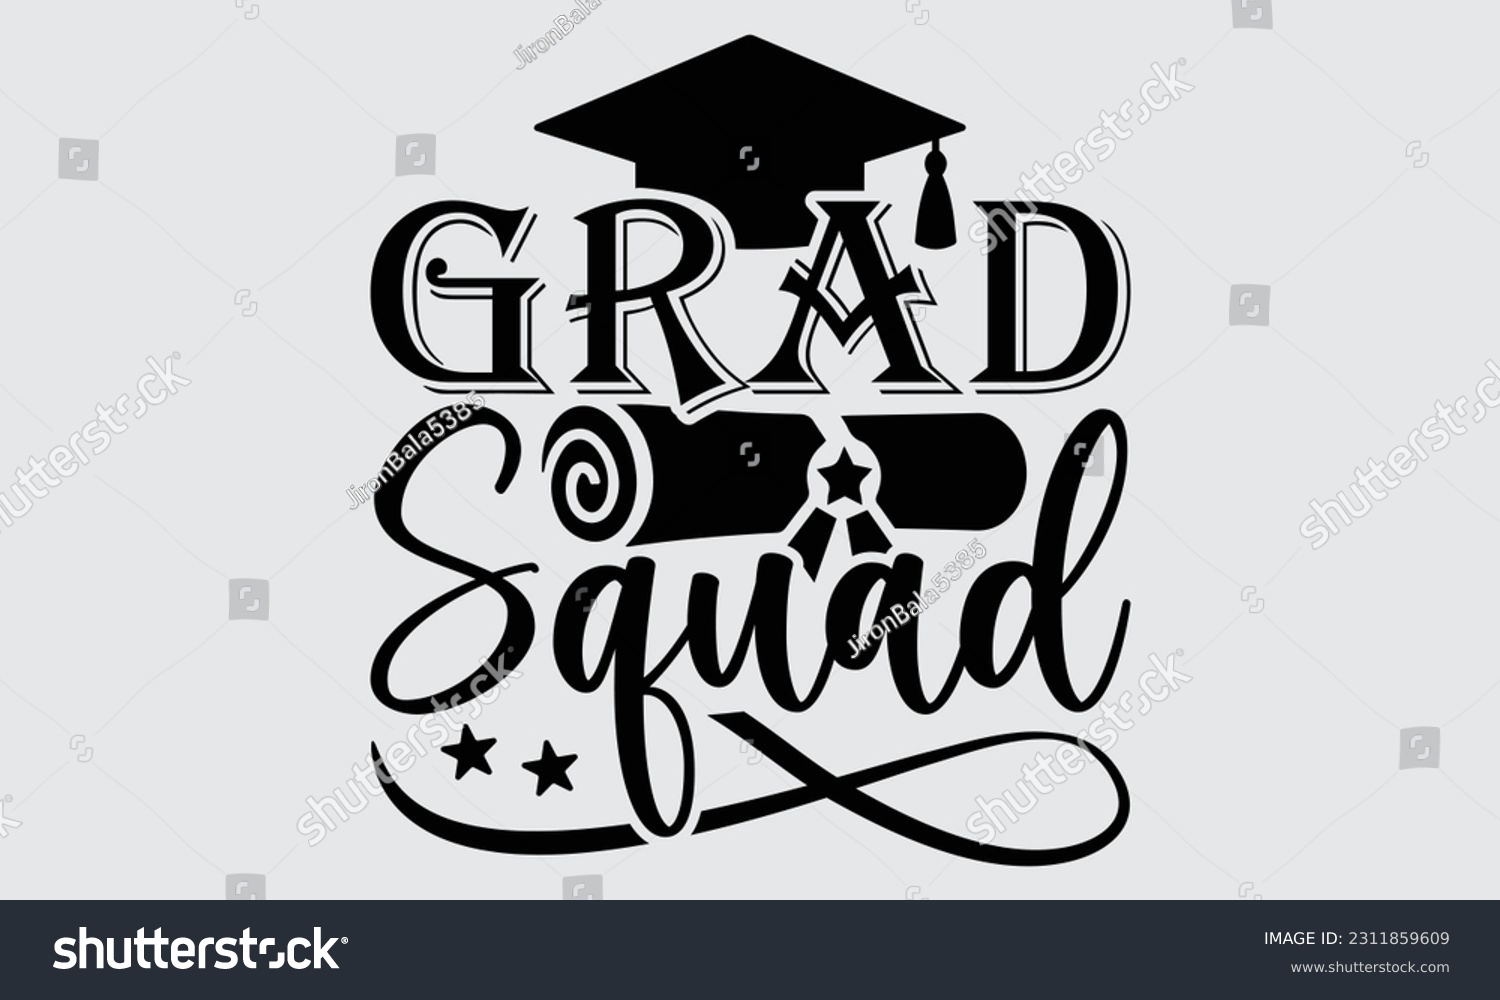 SVG of Grad Squad - Graduate T-Shirt Design, Motivational Inspirational SVG Quotes, Hand Drawn Vintage Illustration With Hand-Lettering And Decoration Elements. svg